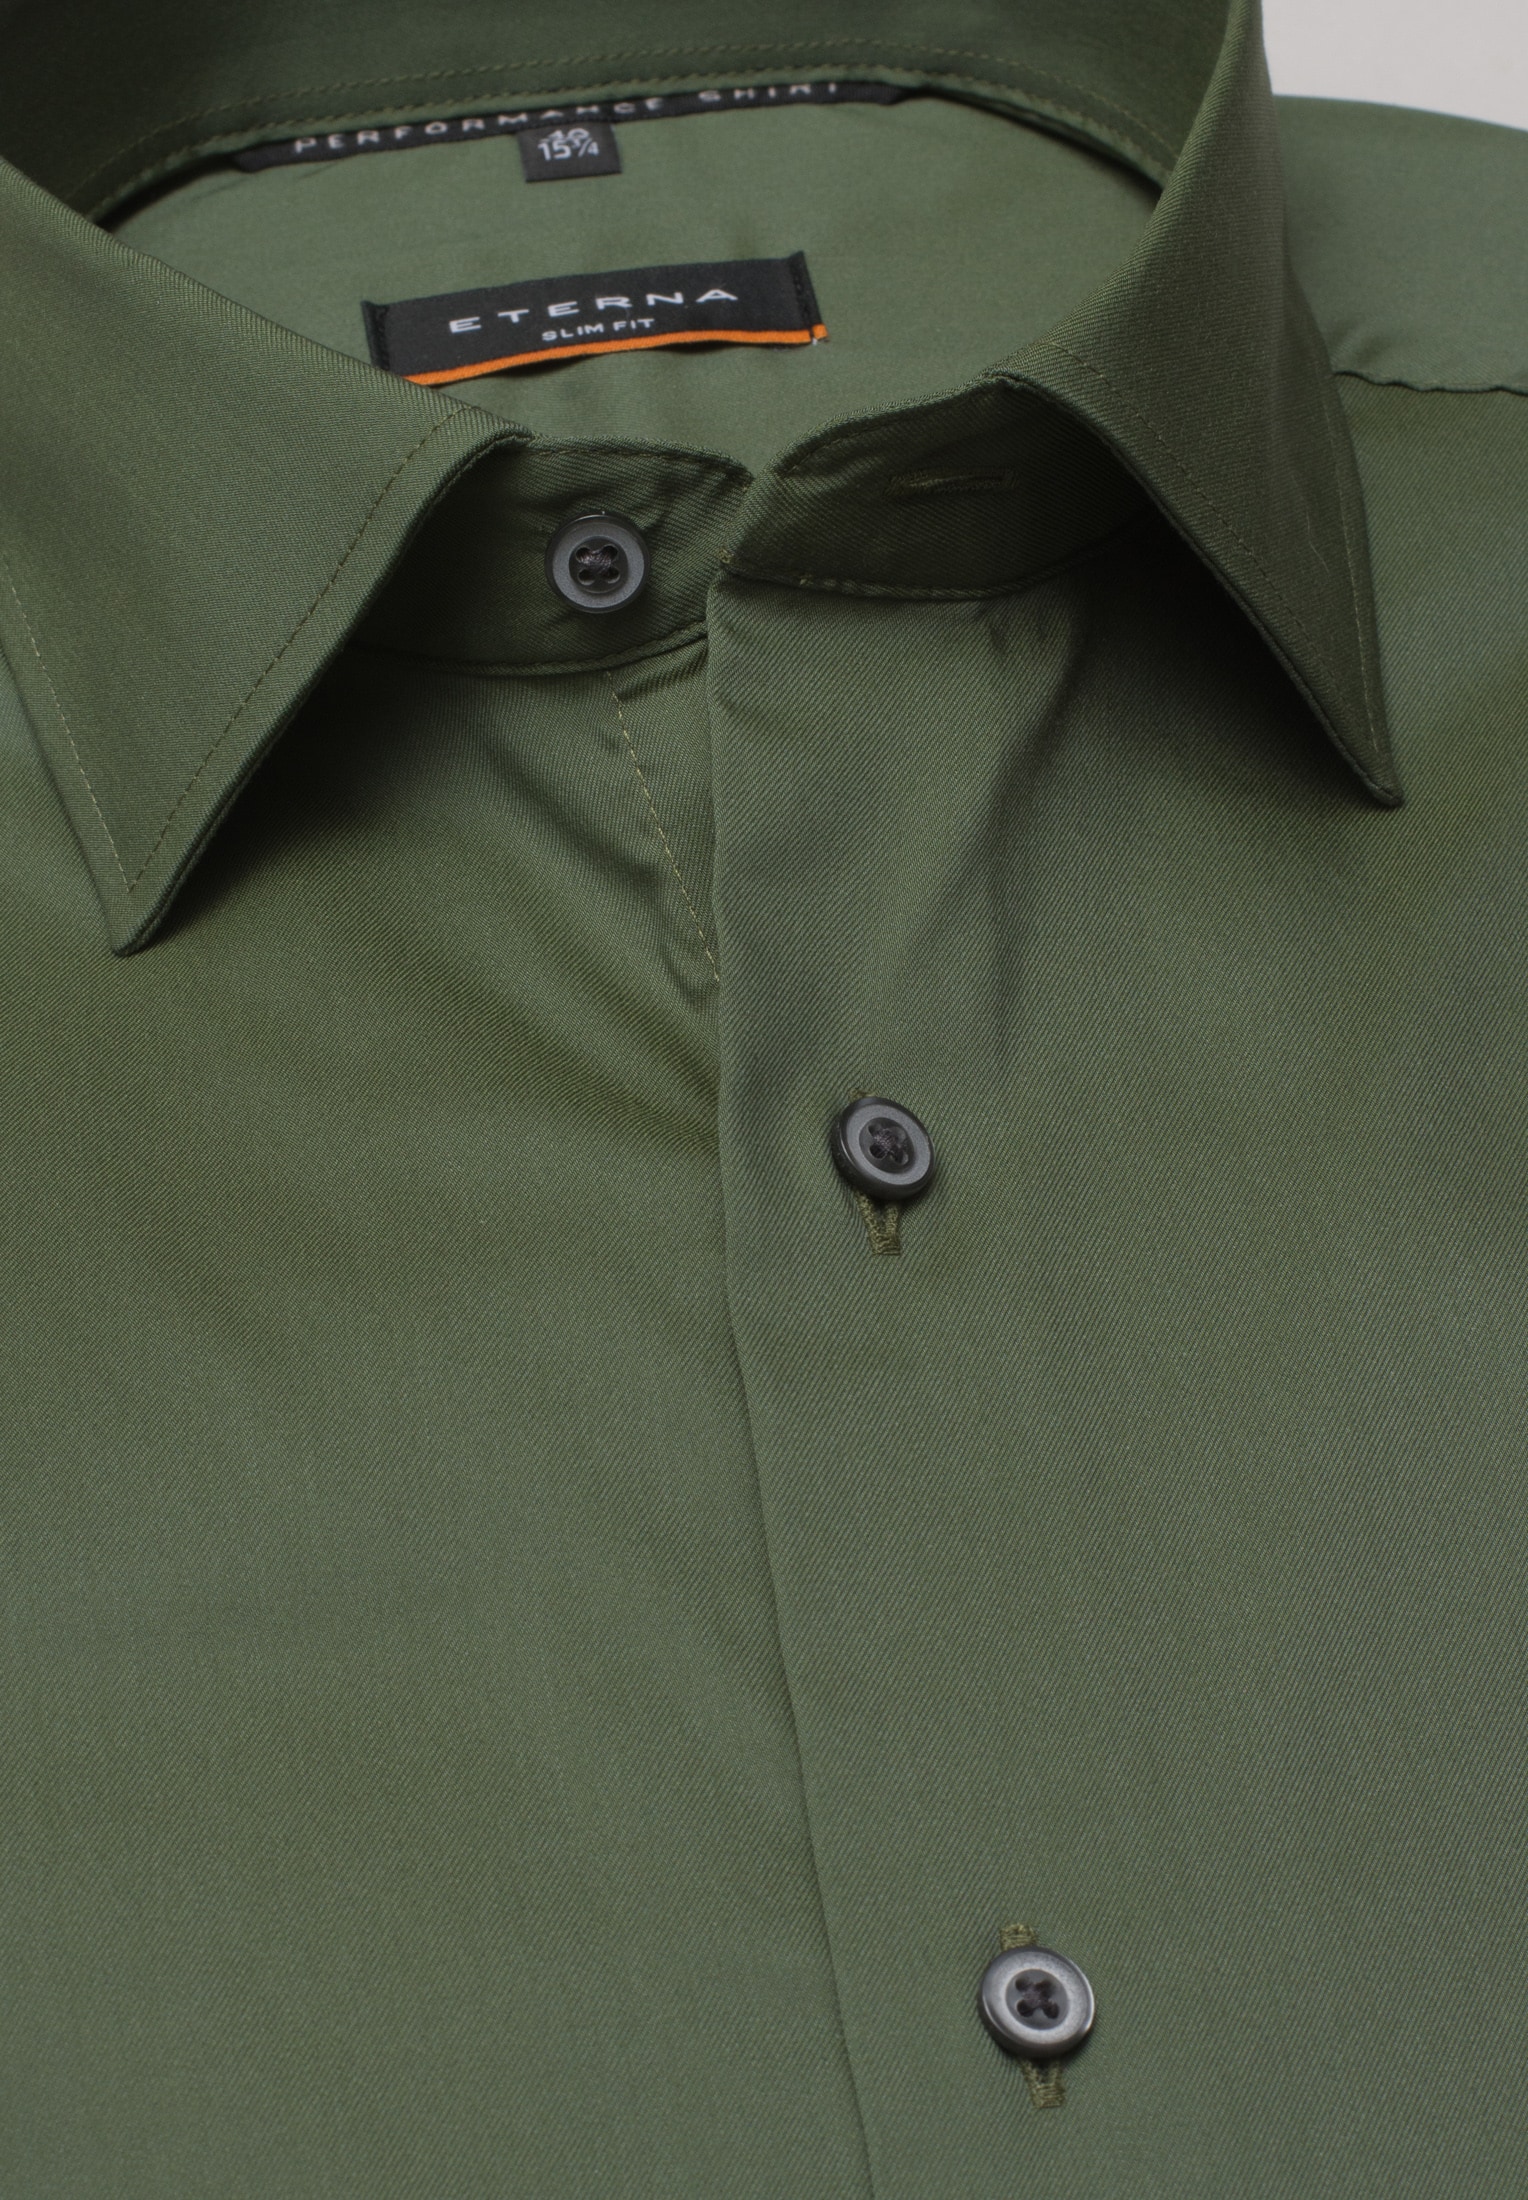 | Langarm in unifarben Performance SLIM 41 FIT Shirt | olive olive | 1SH02217-04-51-41-1/1 |